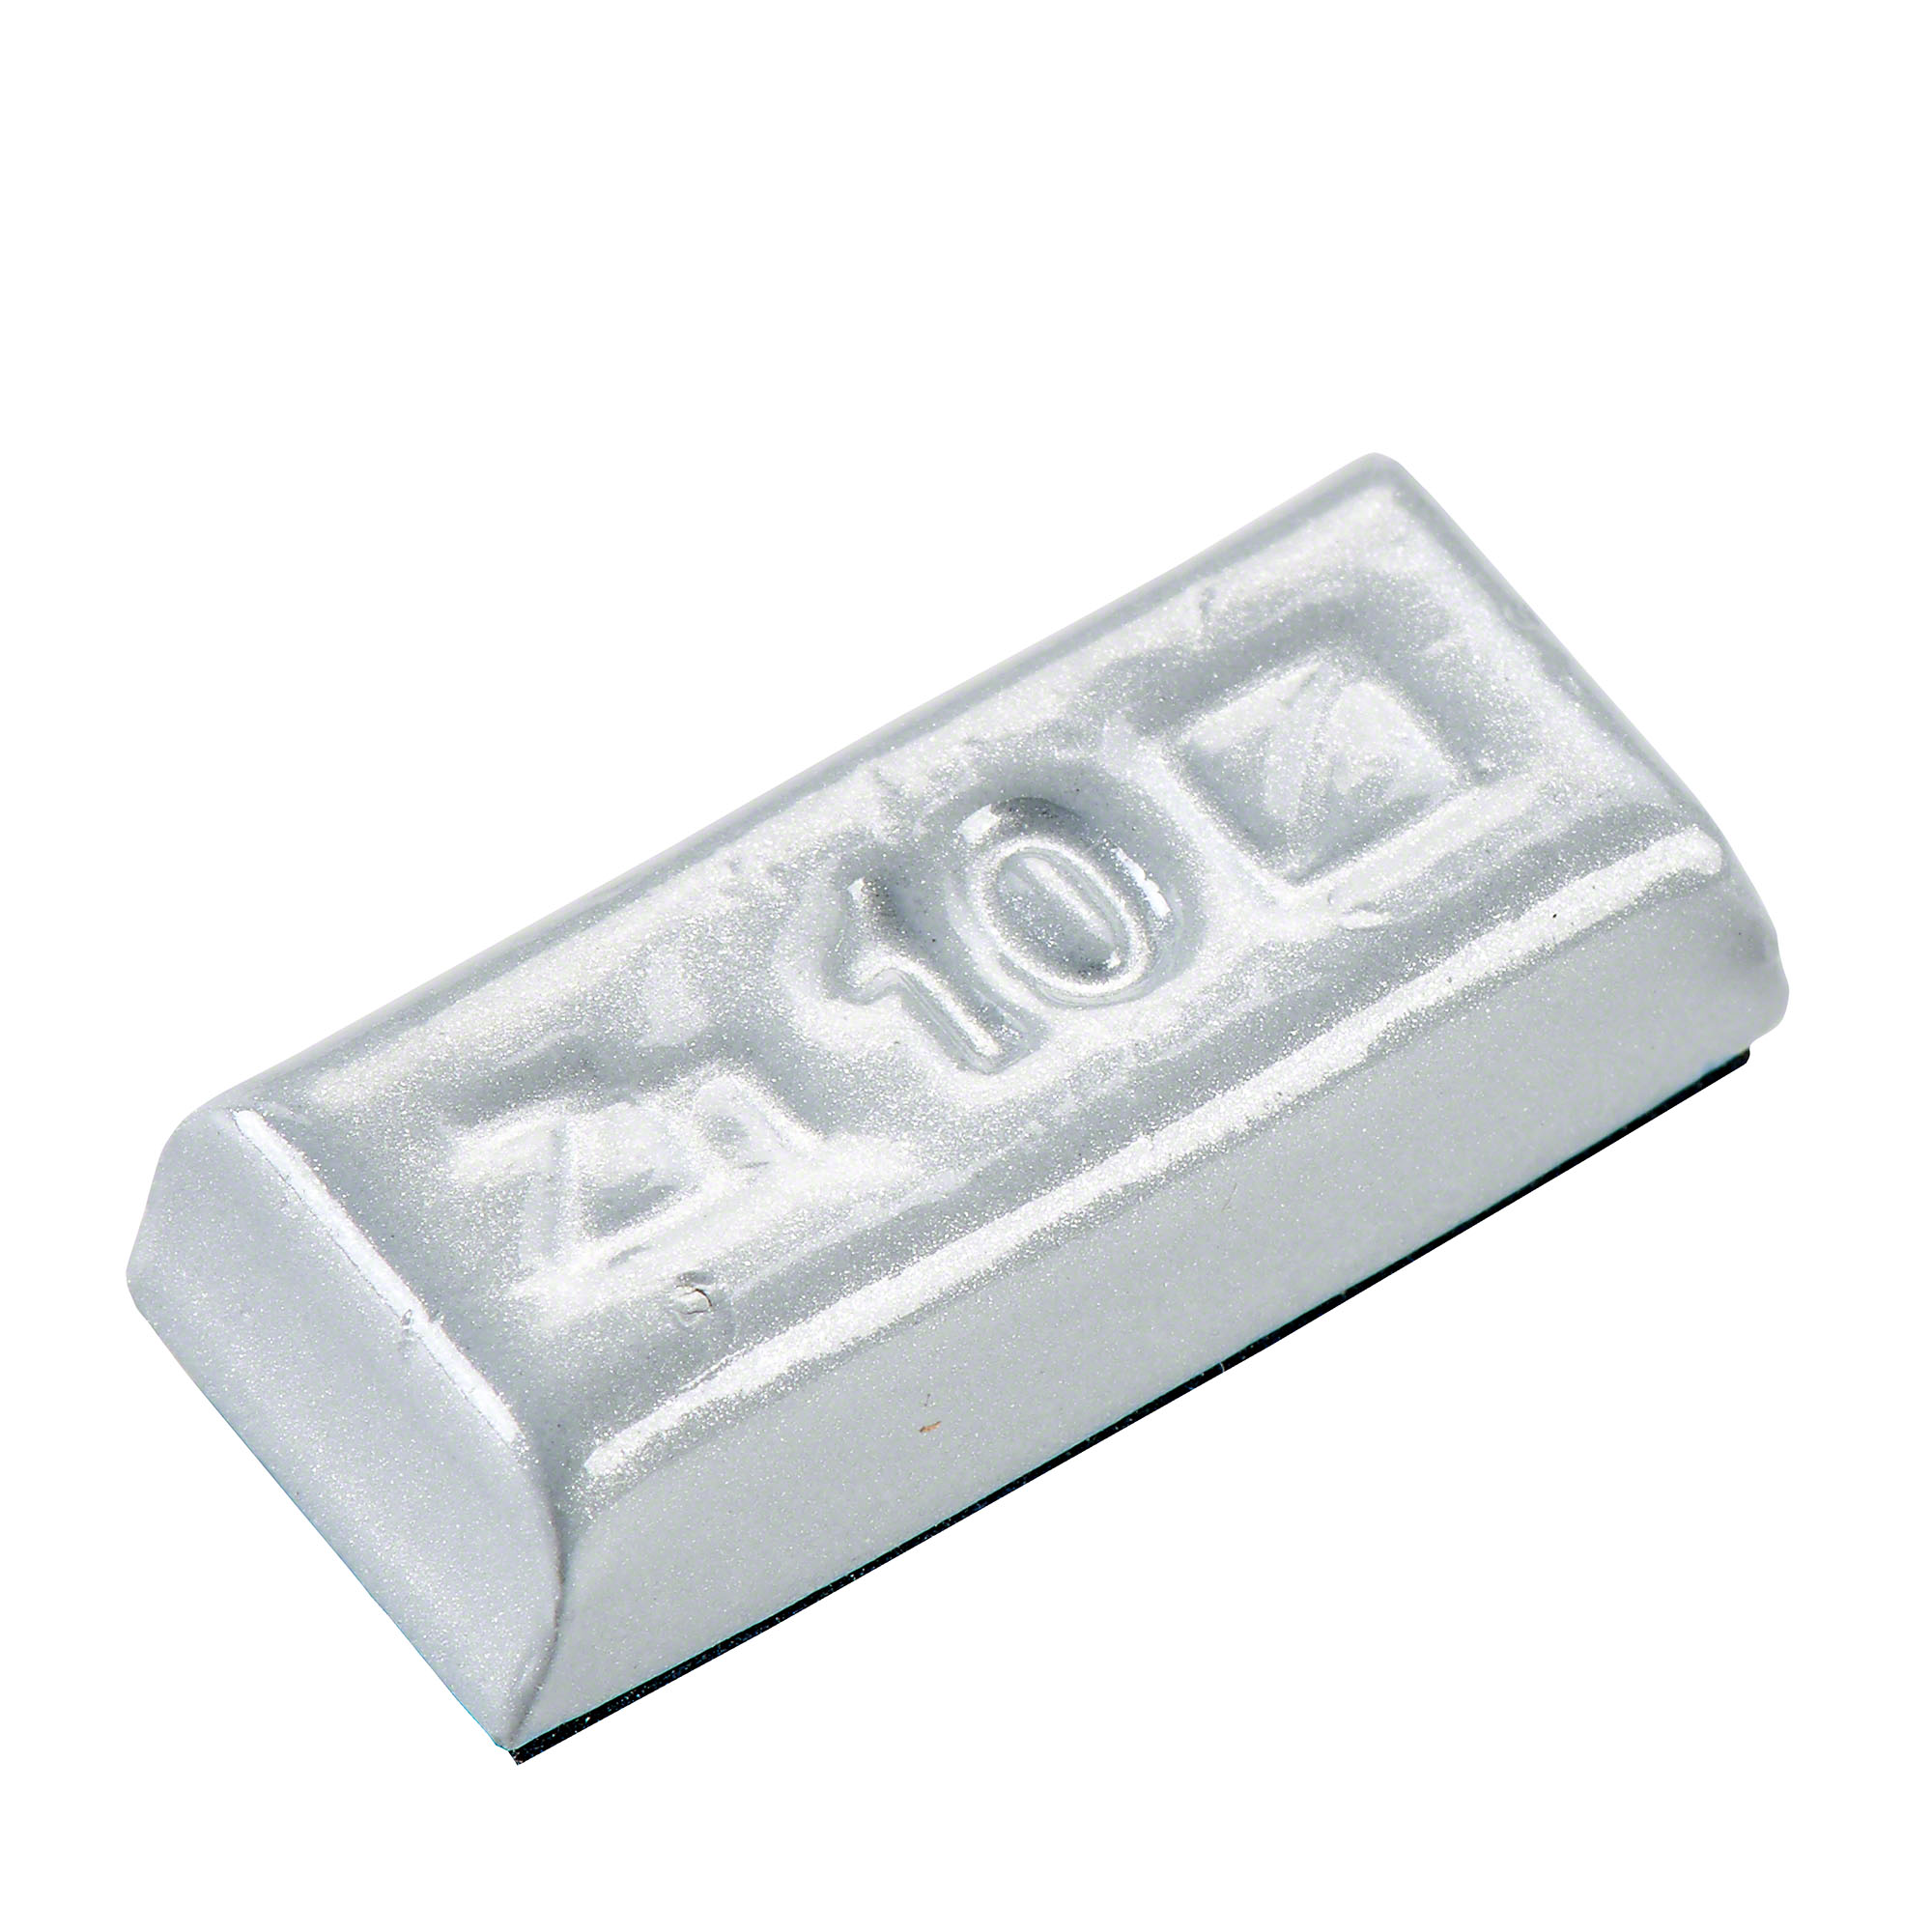 Peso adesivo - Typ 799, 10 g, zinco, argento